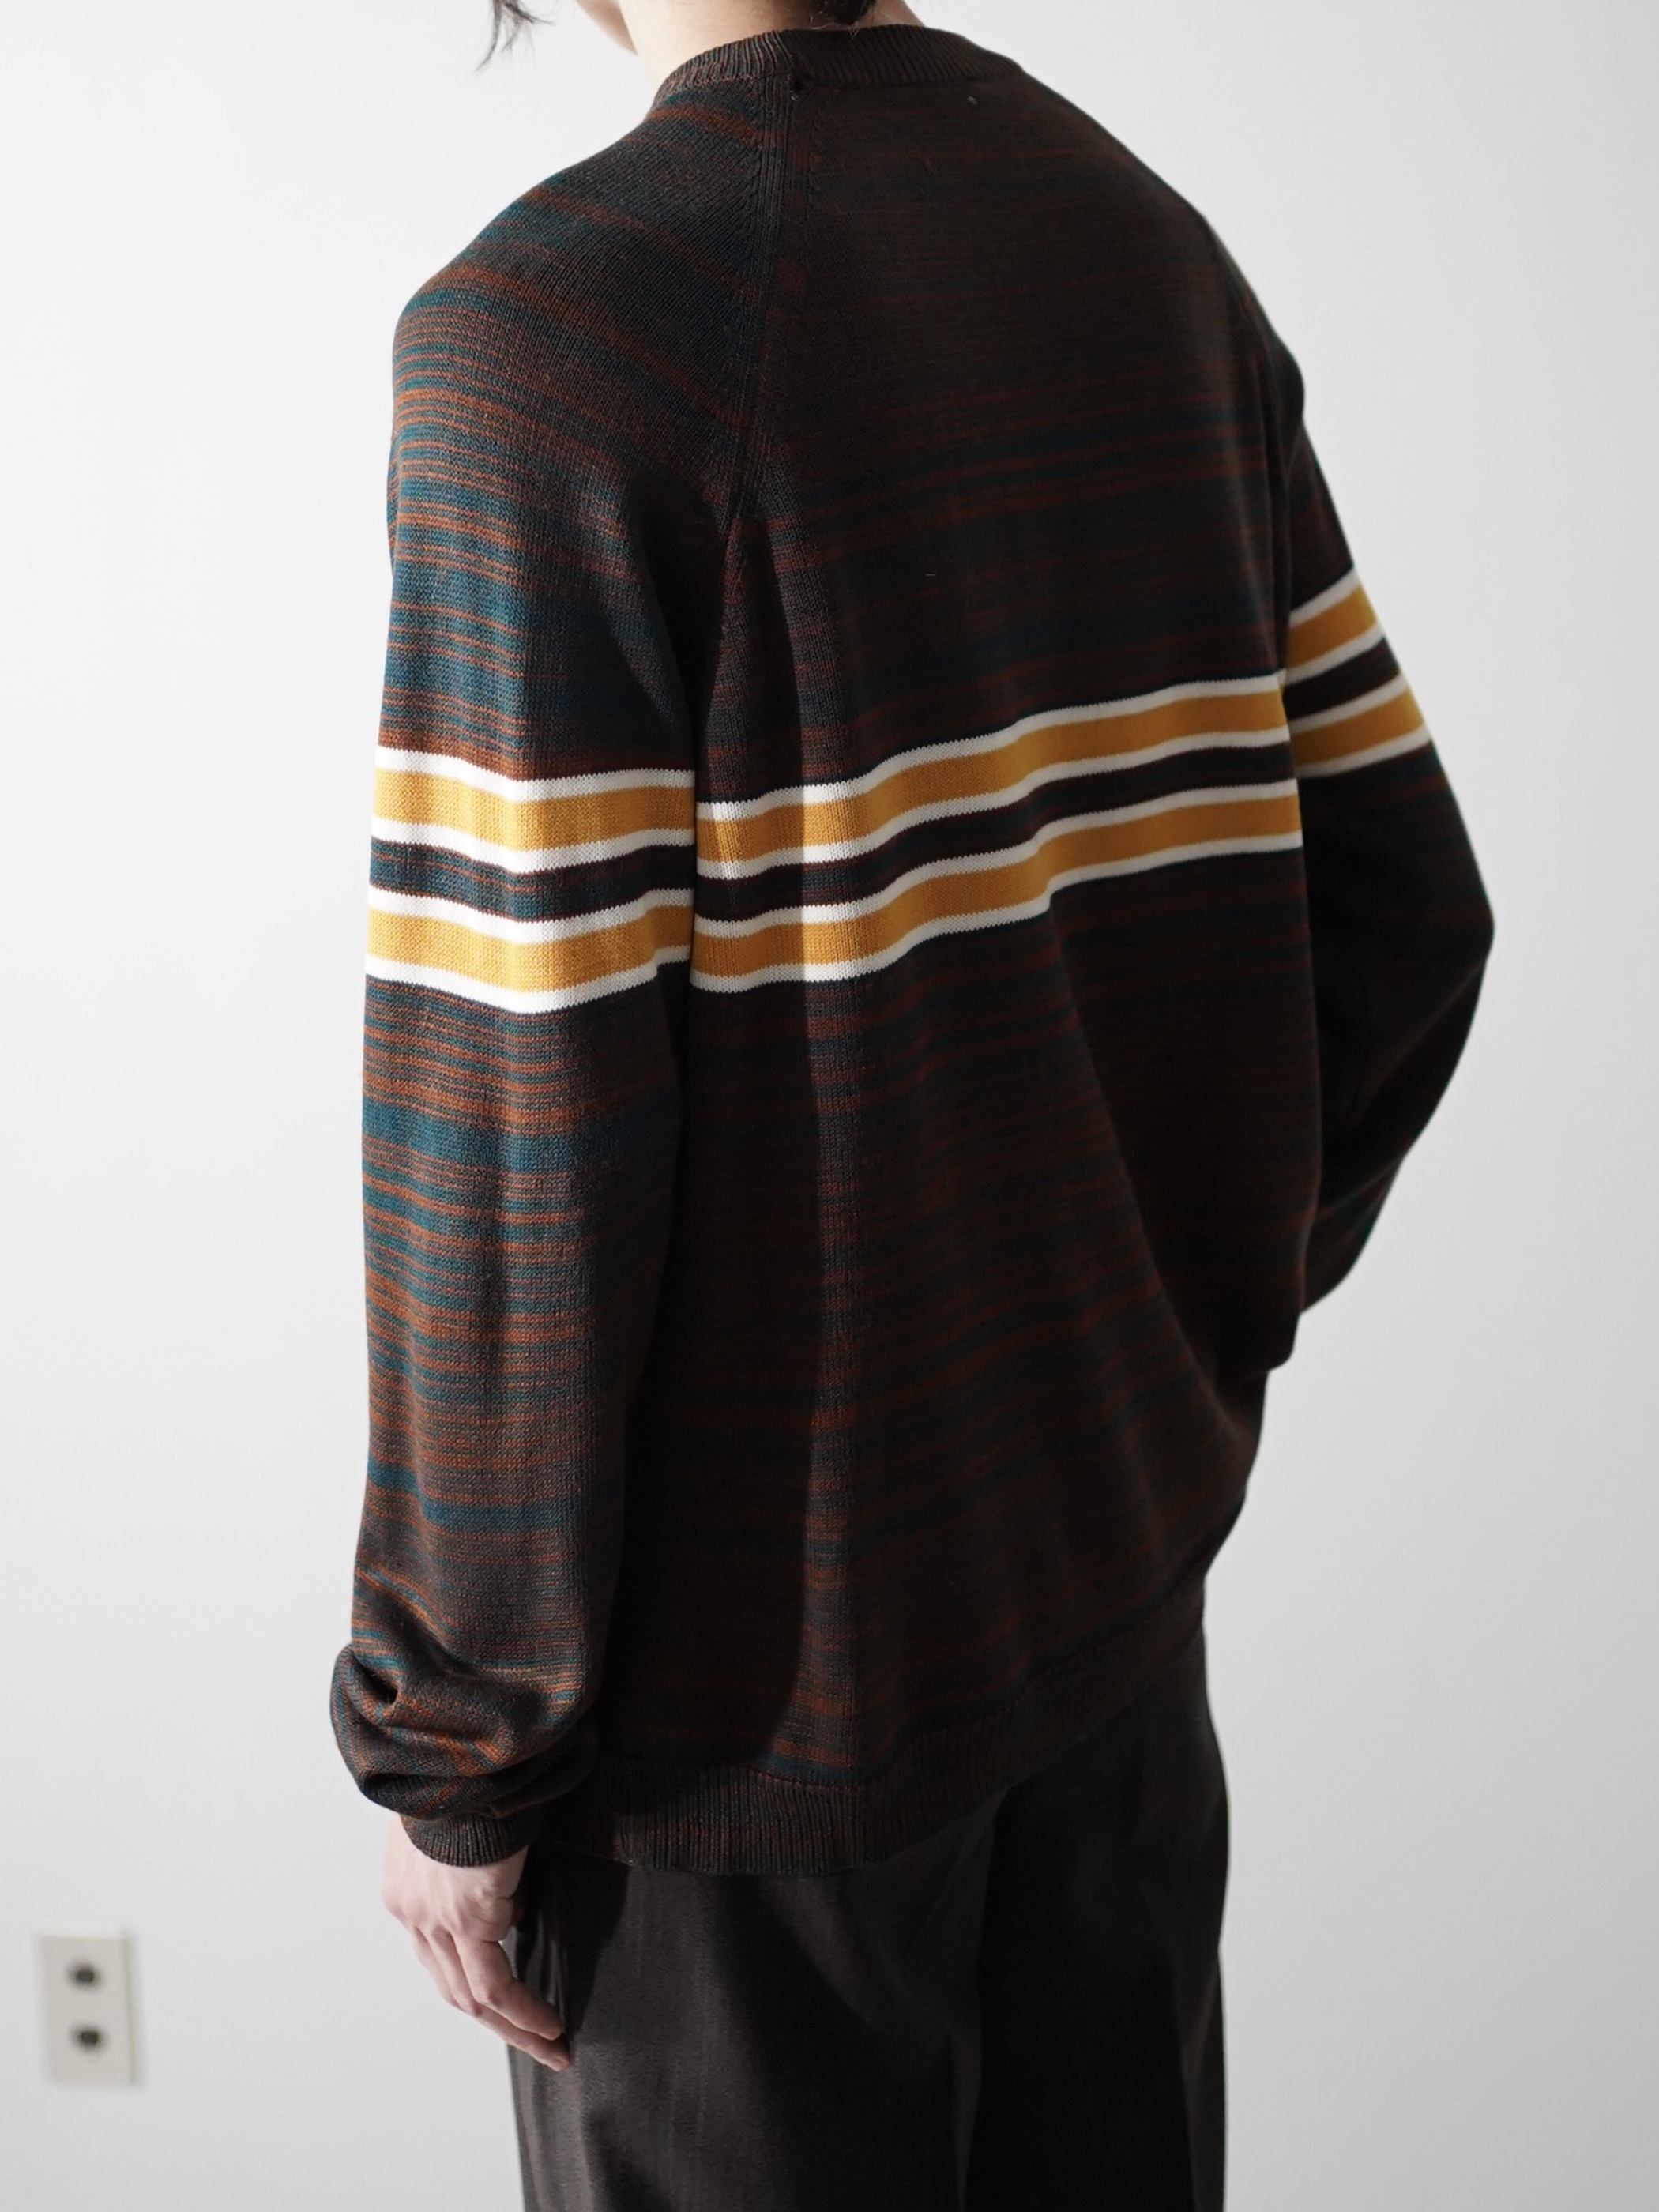 1980's Acryl knit Mulch border sweater